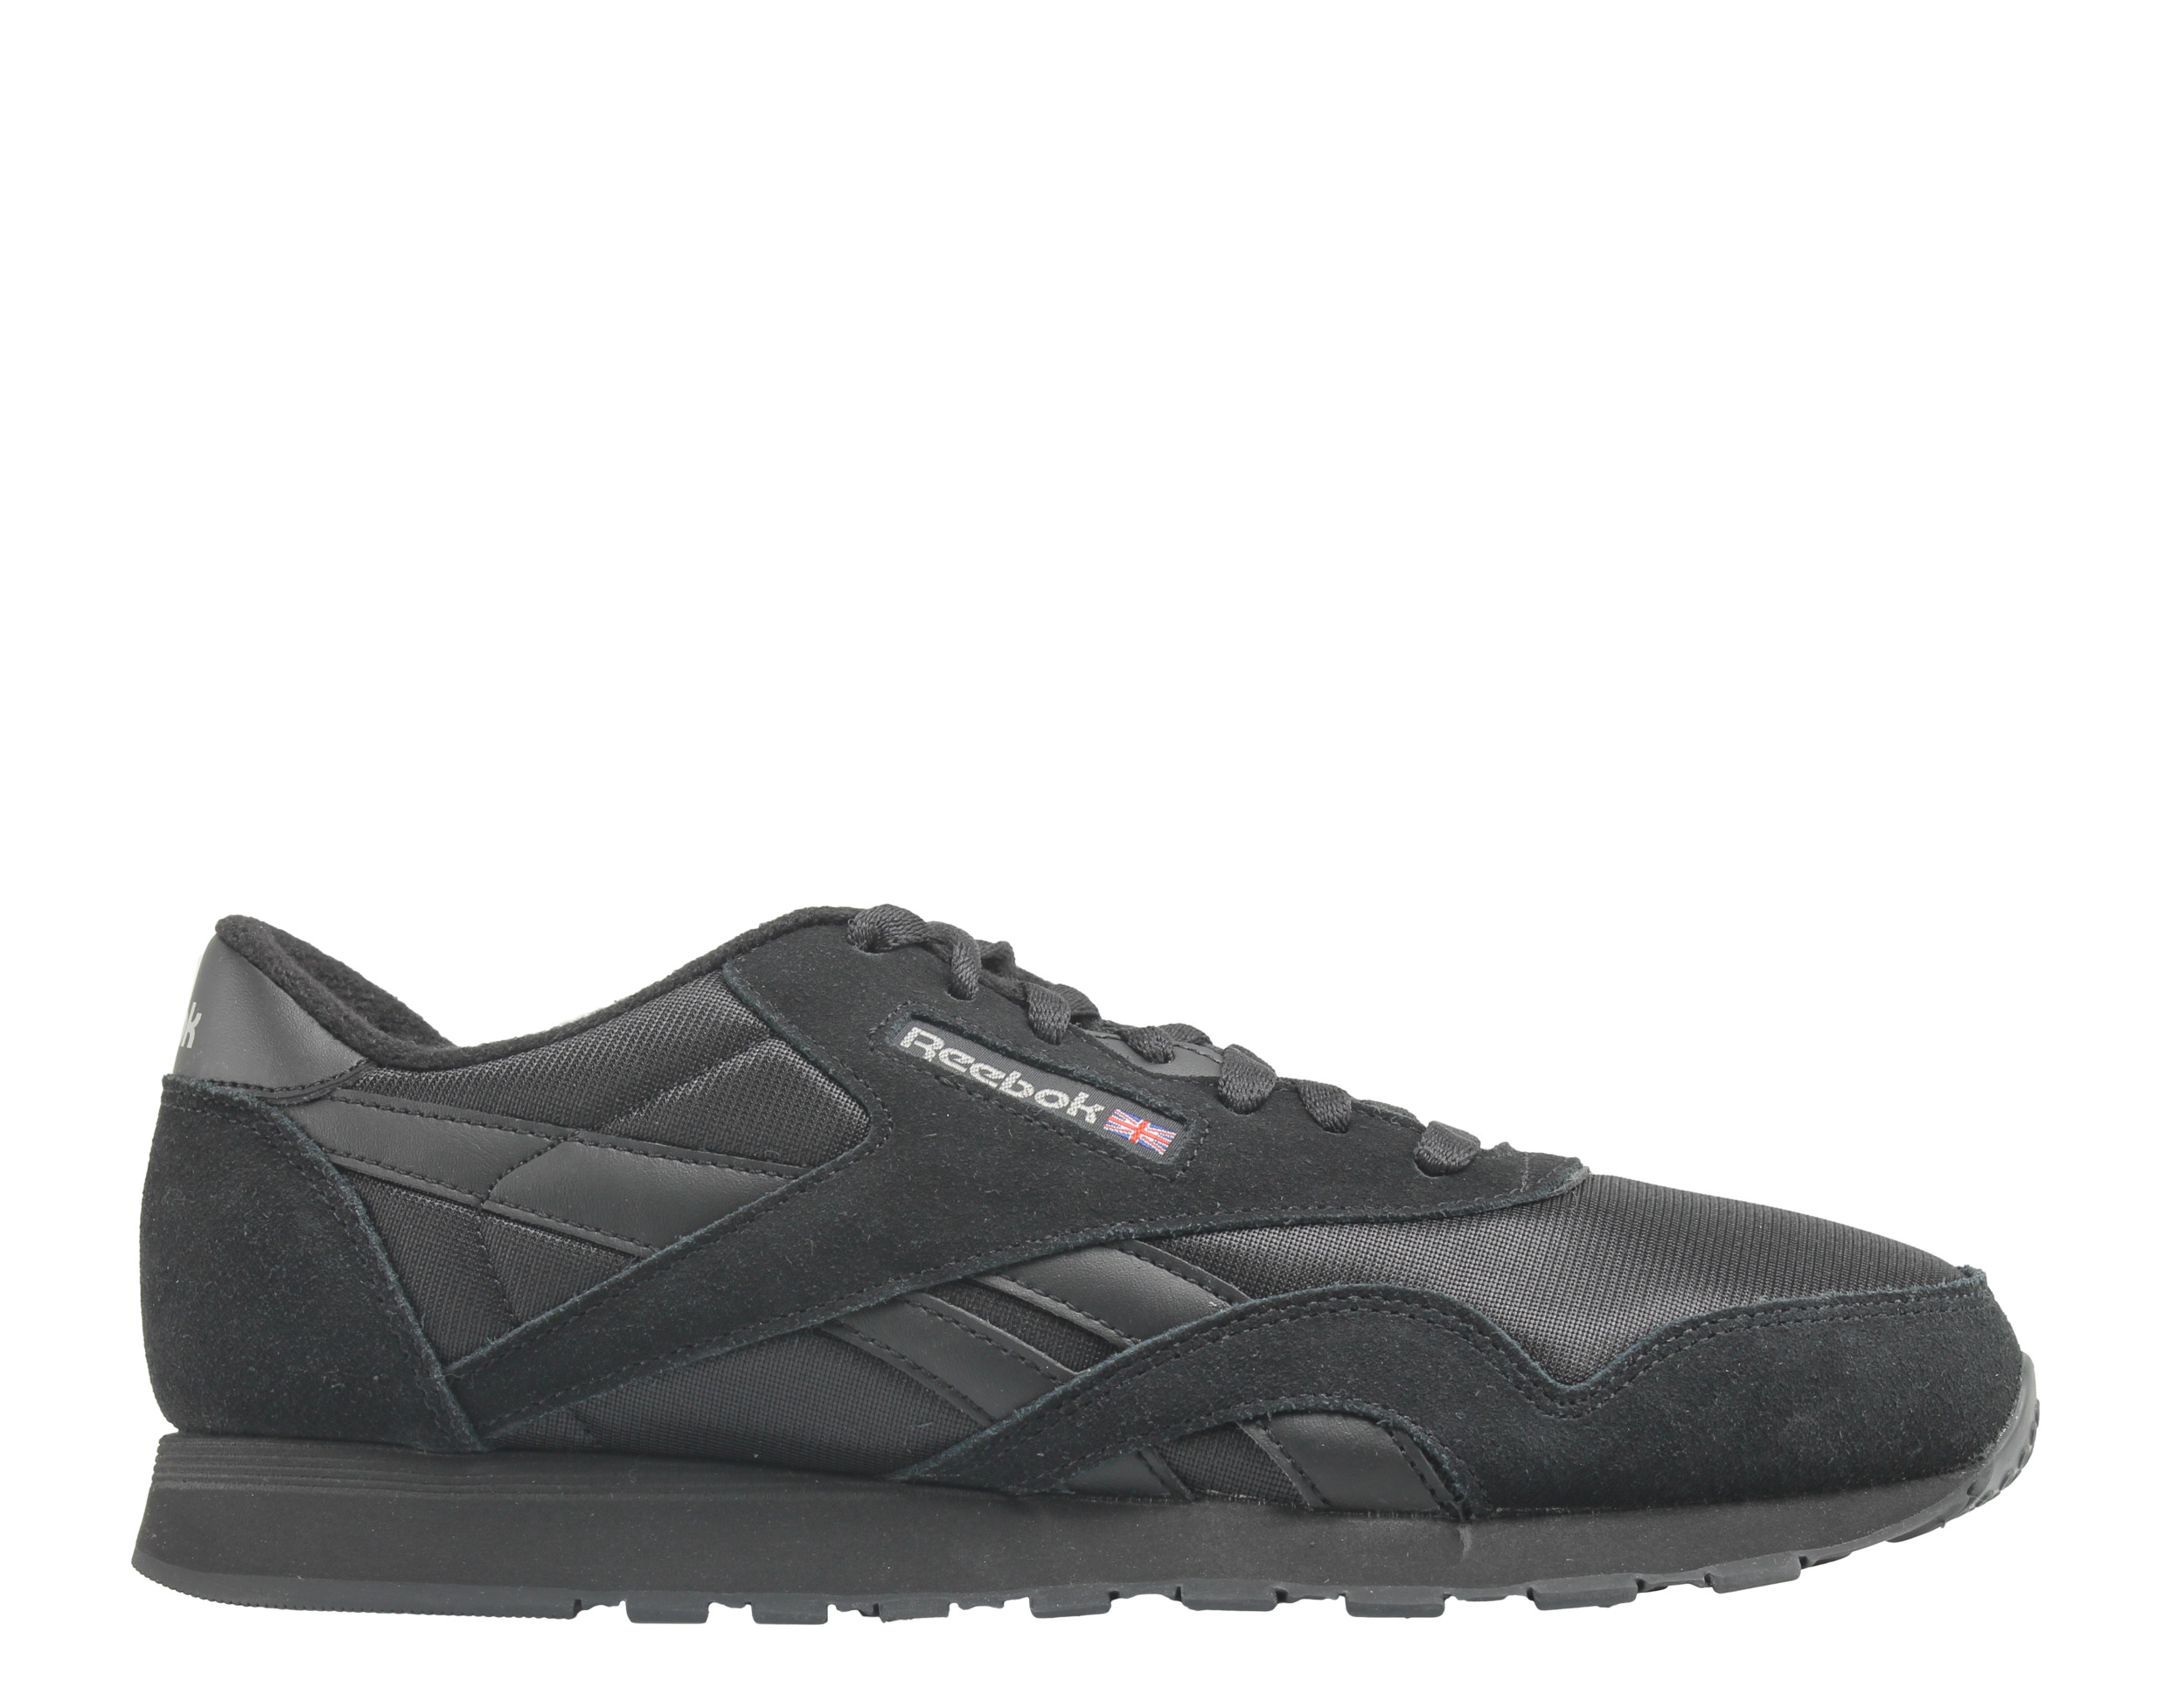 Reebok Classic Nylon Men's Running Shoes Size 9 - image 2 of 6